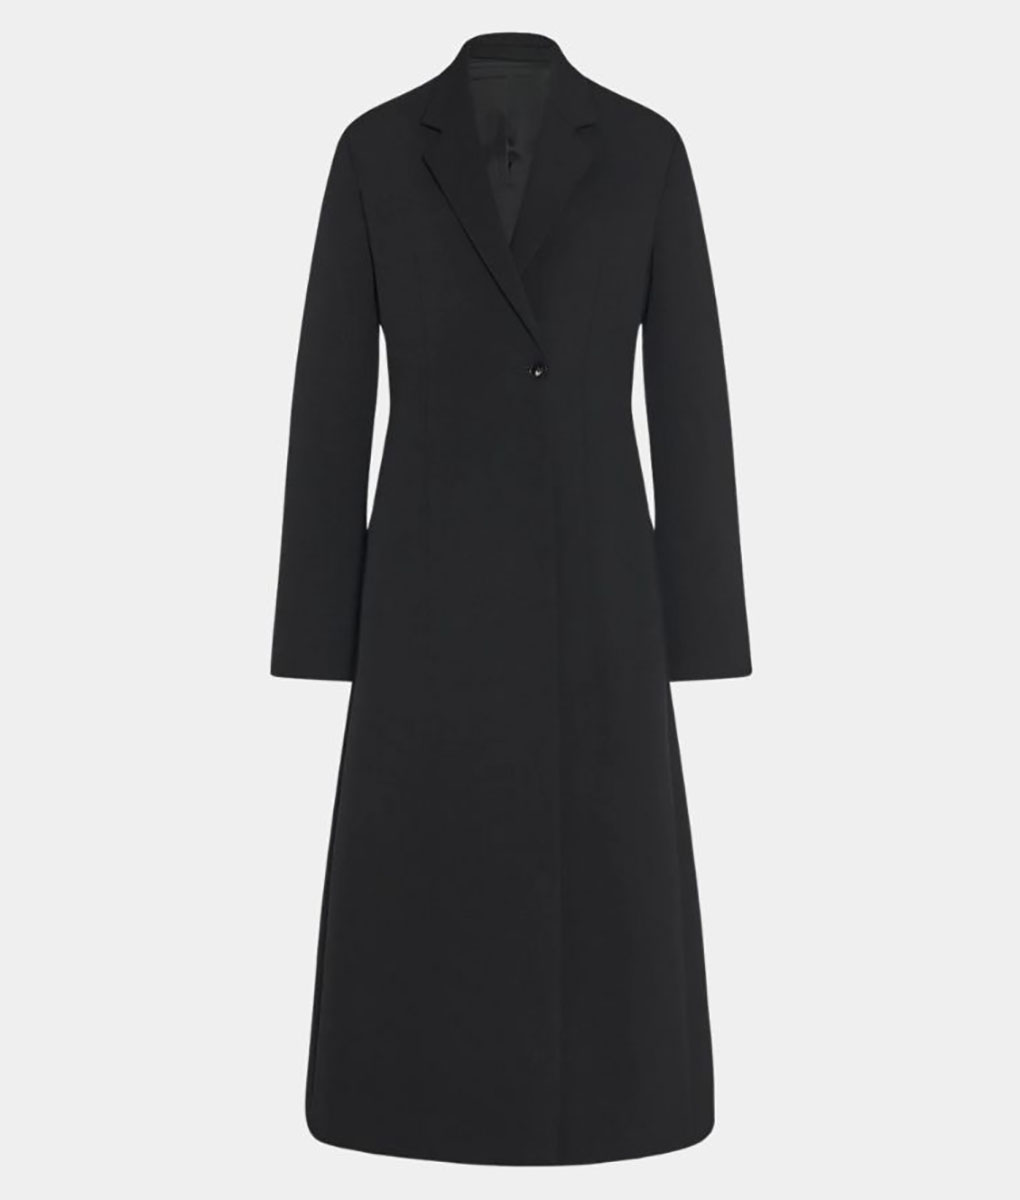 Agatha Harkness Black Trench Coat (1)